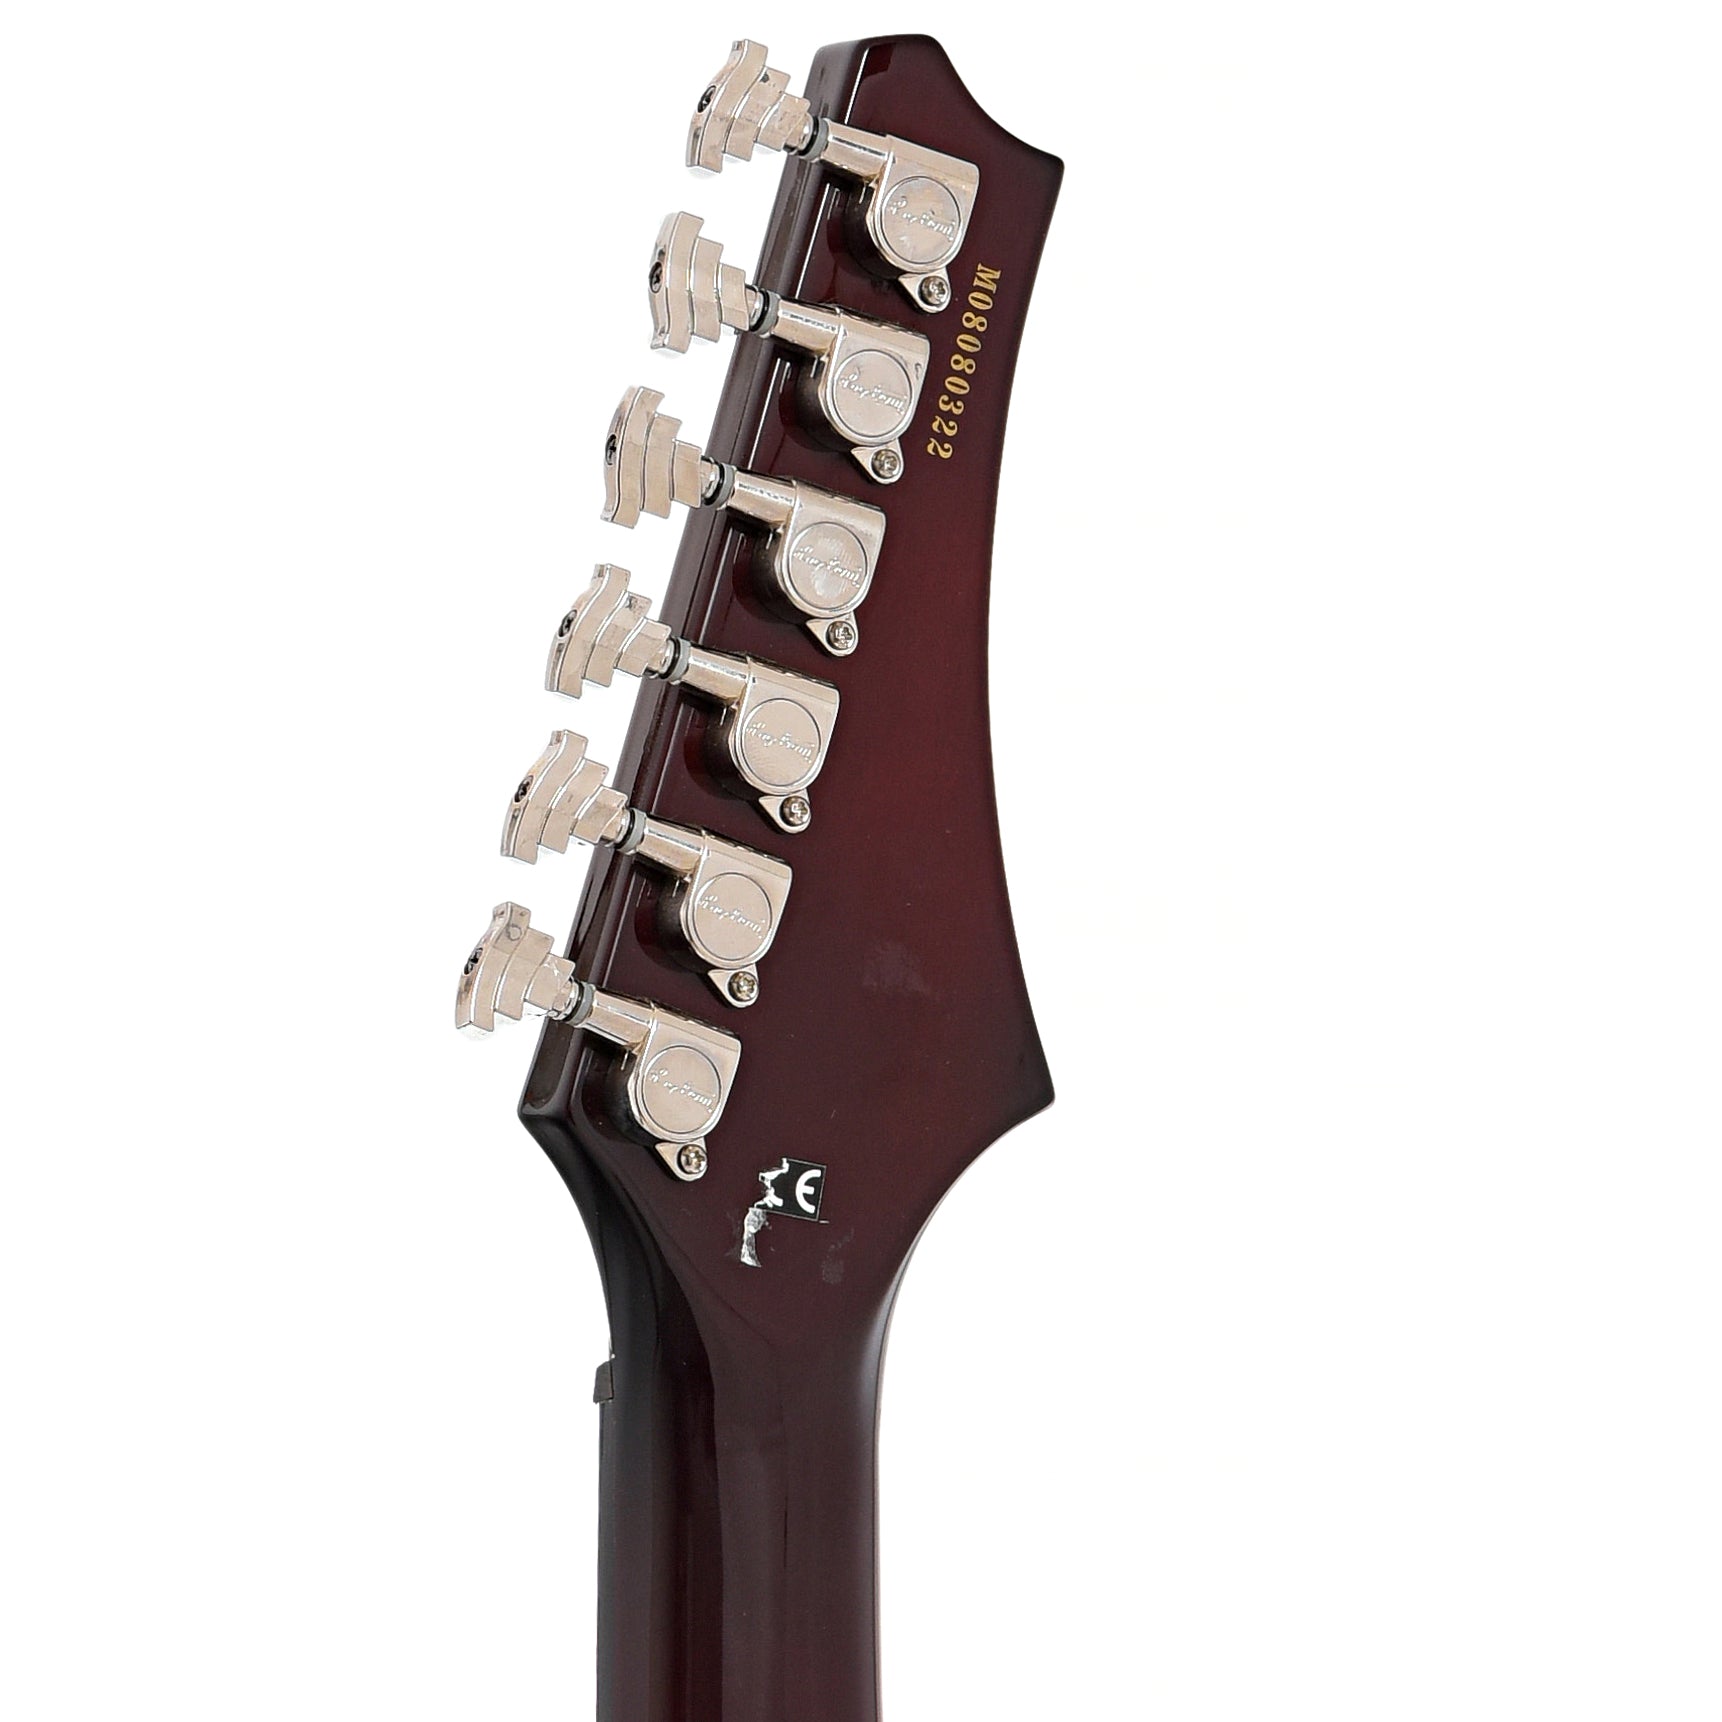 Back headstock of Hagstrom XL-2 LH Electric Guitar (c.2008)